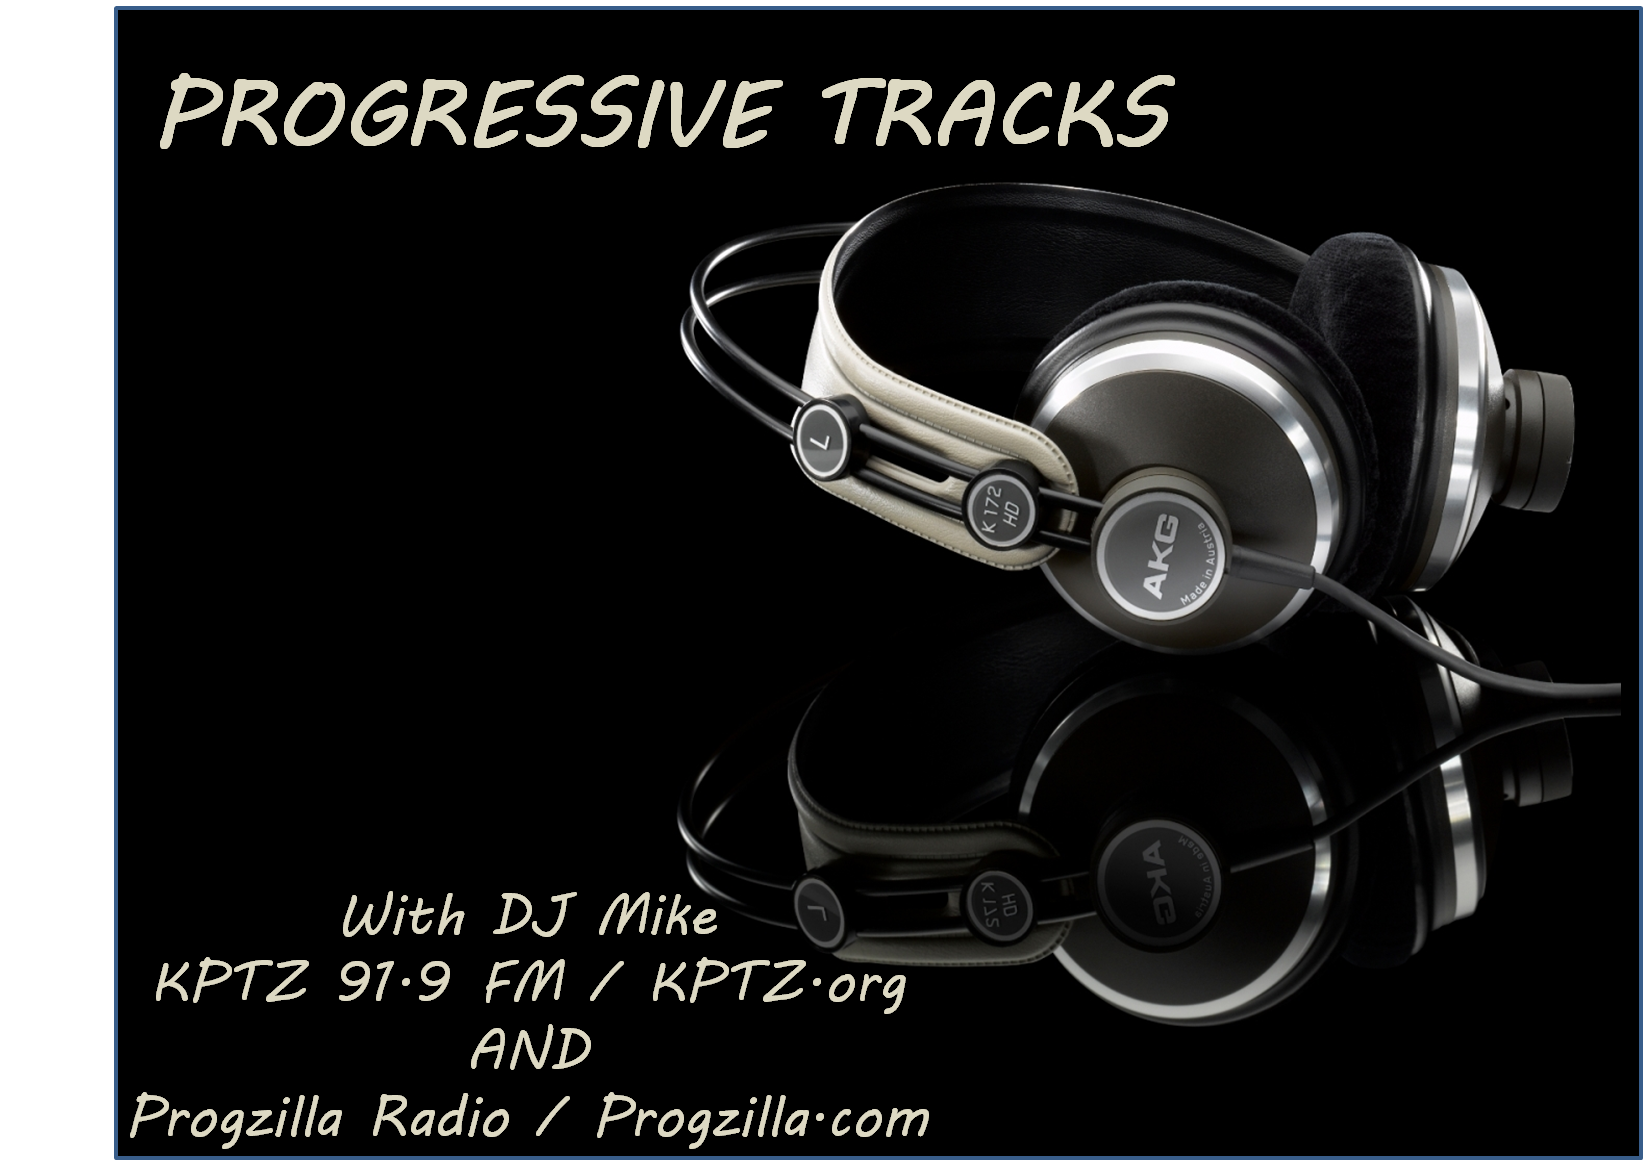 Progressive Tracks #193-2 (ProgPopFormat).jpg